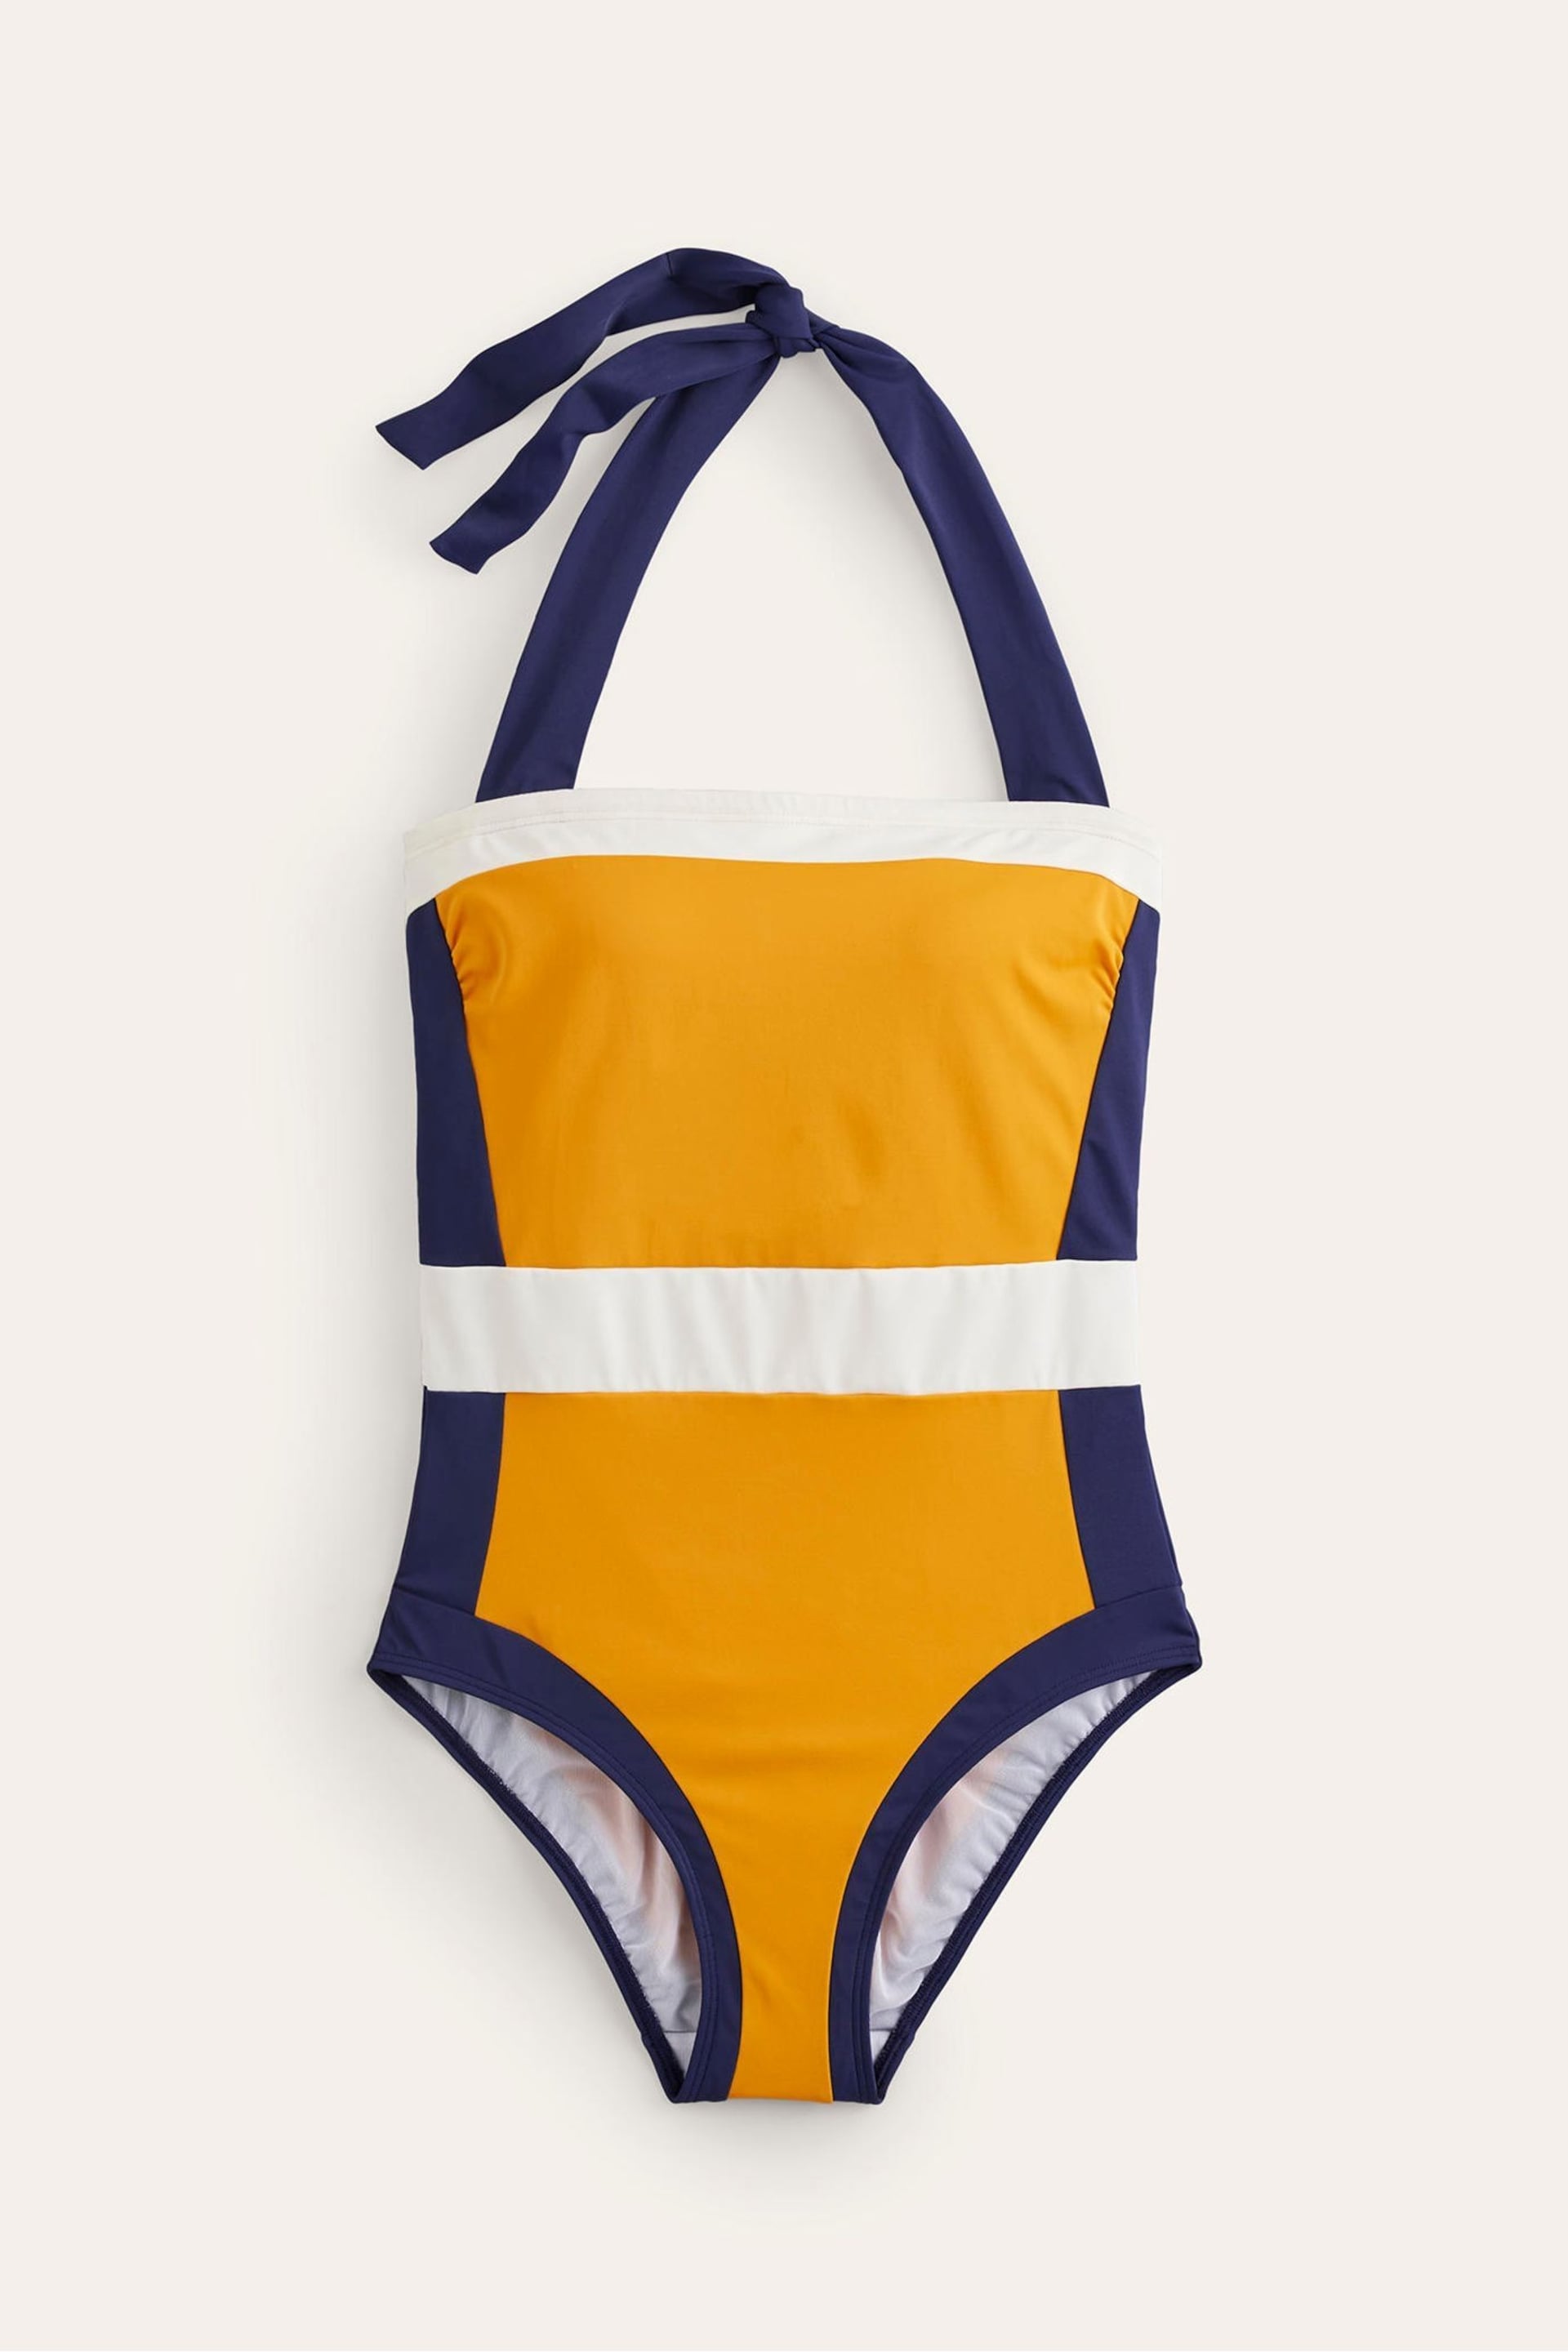 Boden Yellow Santorini Halterneck Swimsuit - Image 6 of 7